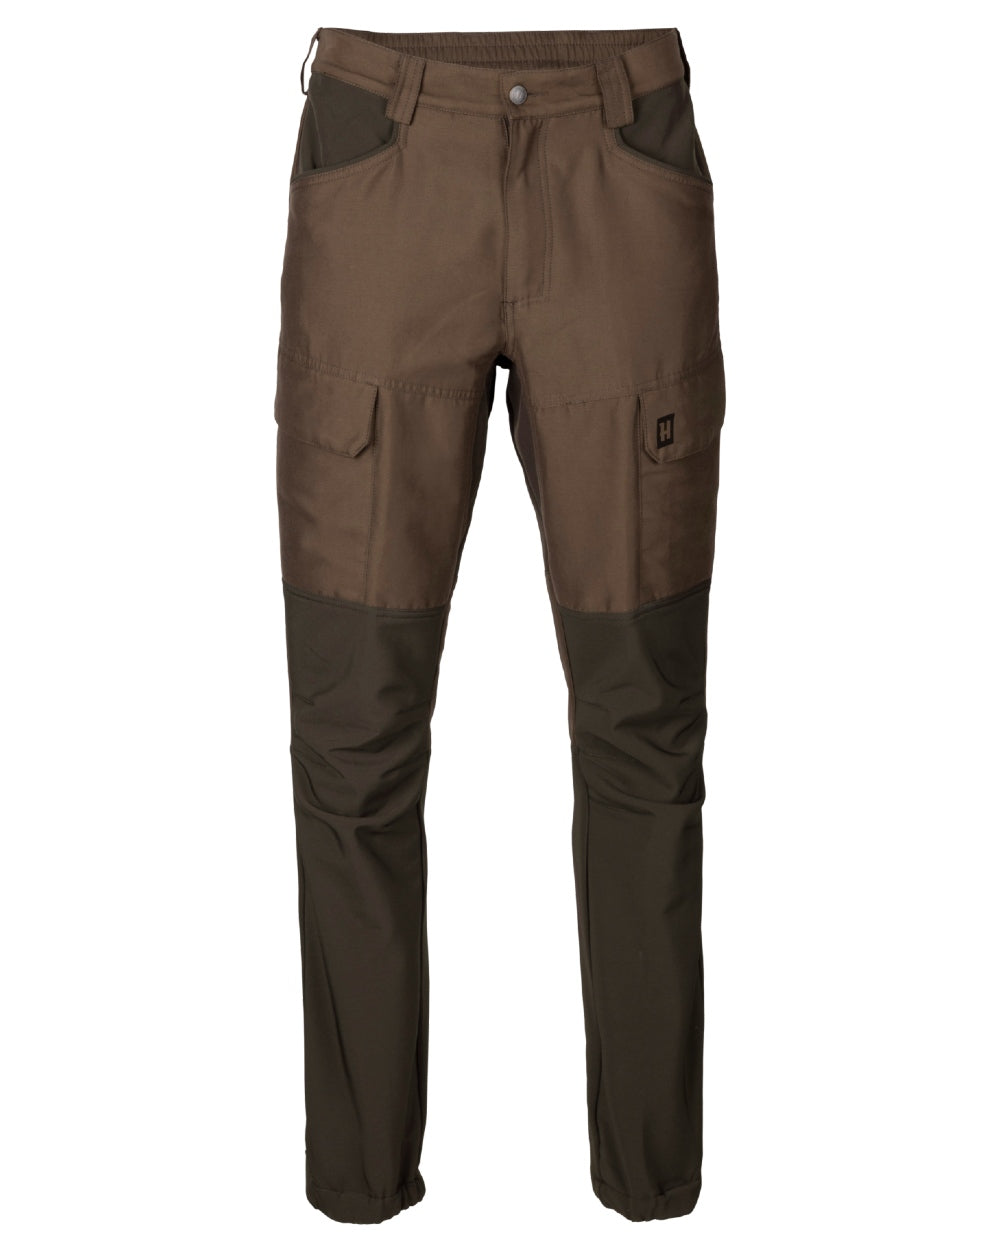 Slate Brown/Shadow Brown coloured Harkila Scandinavian Trousers on white background 